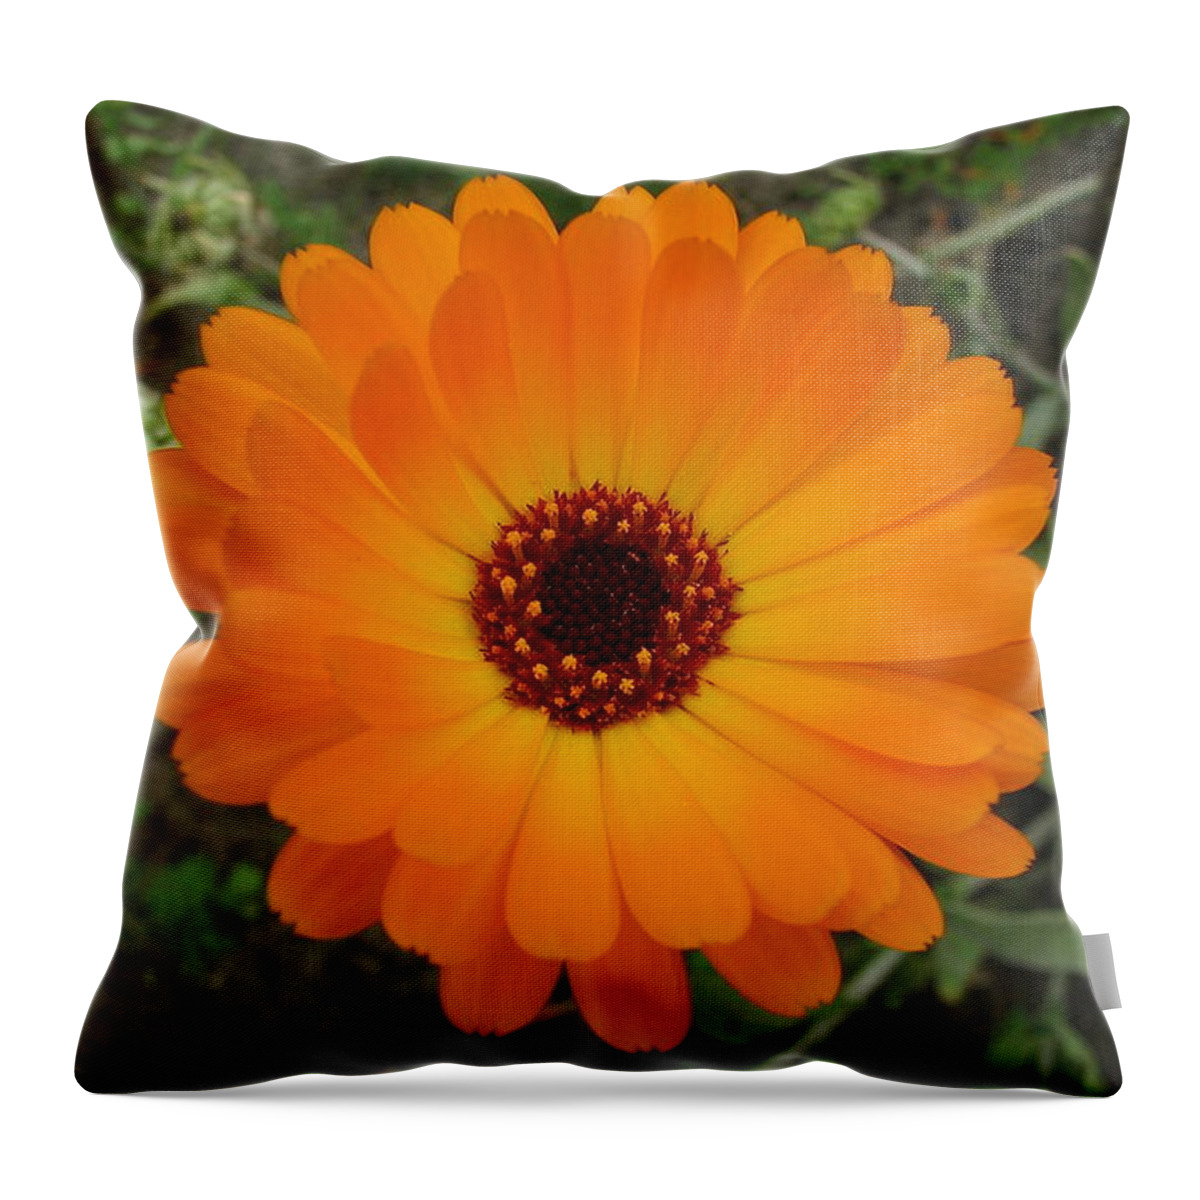 Flower Throw Pillow featuring the photograph Orange Husbandman's Dial Marigold Flower by Taiche Acrylic Art